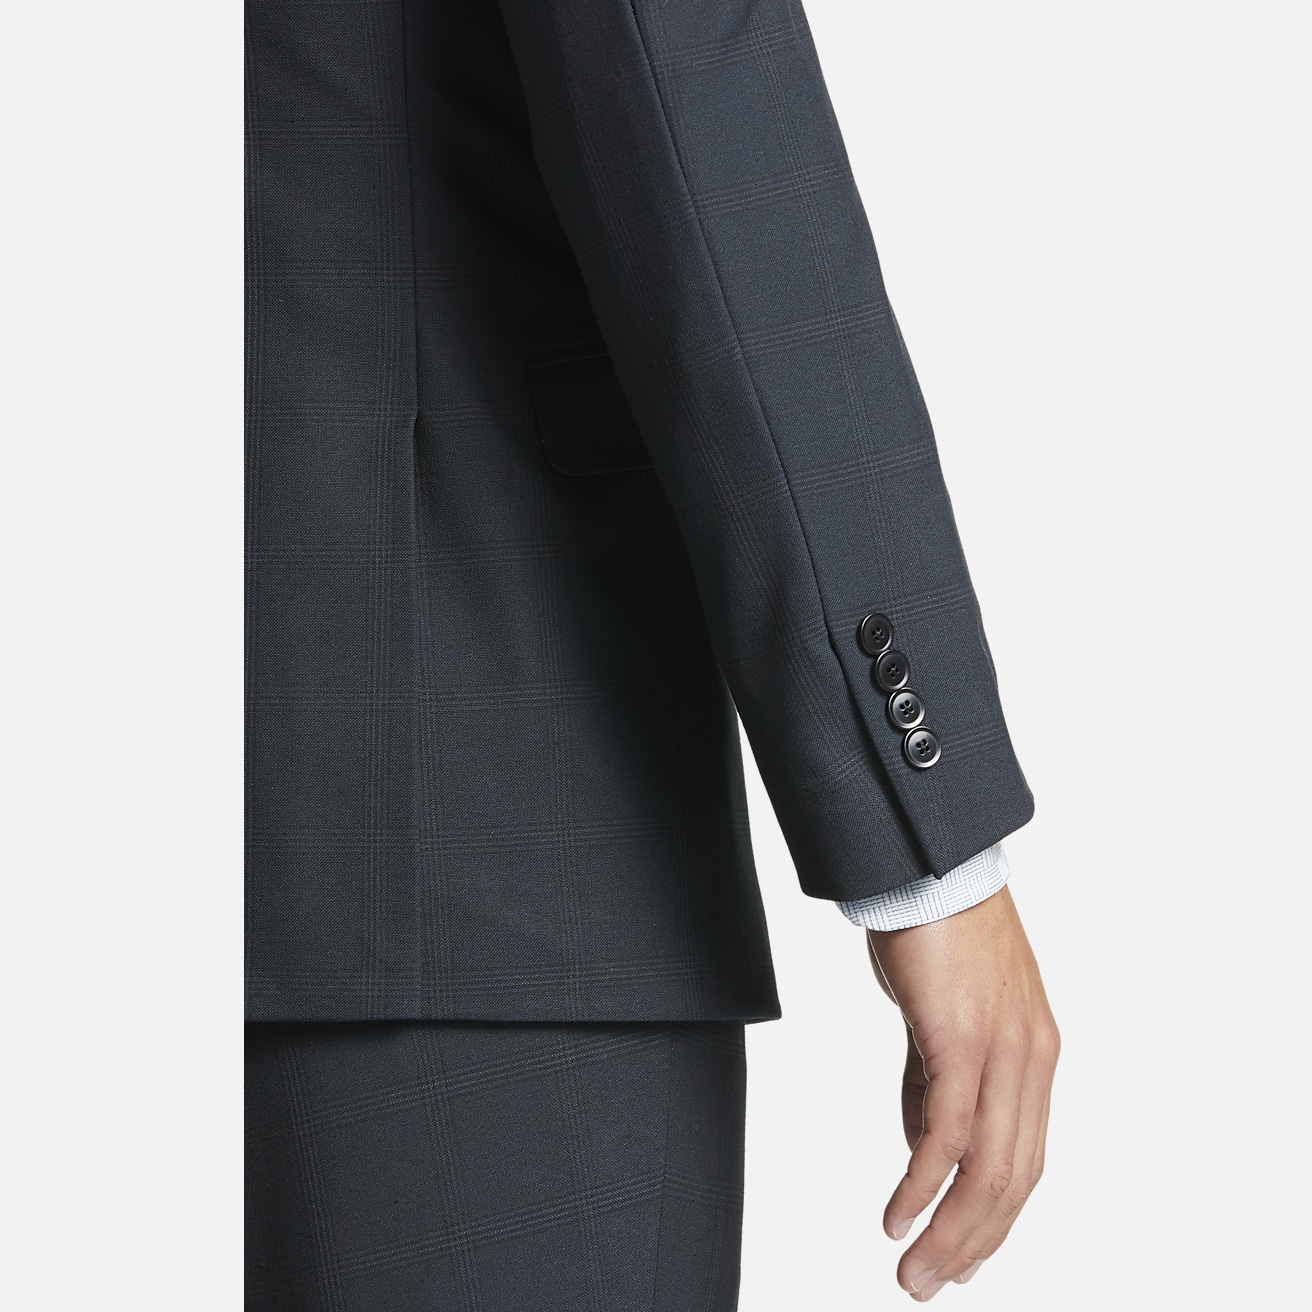 Mens Blazer Plaid Wool Suit Coats Lapel Long Sleeve Button Suit Business  Casual and Formal Suit Jacket